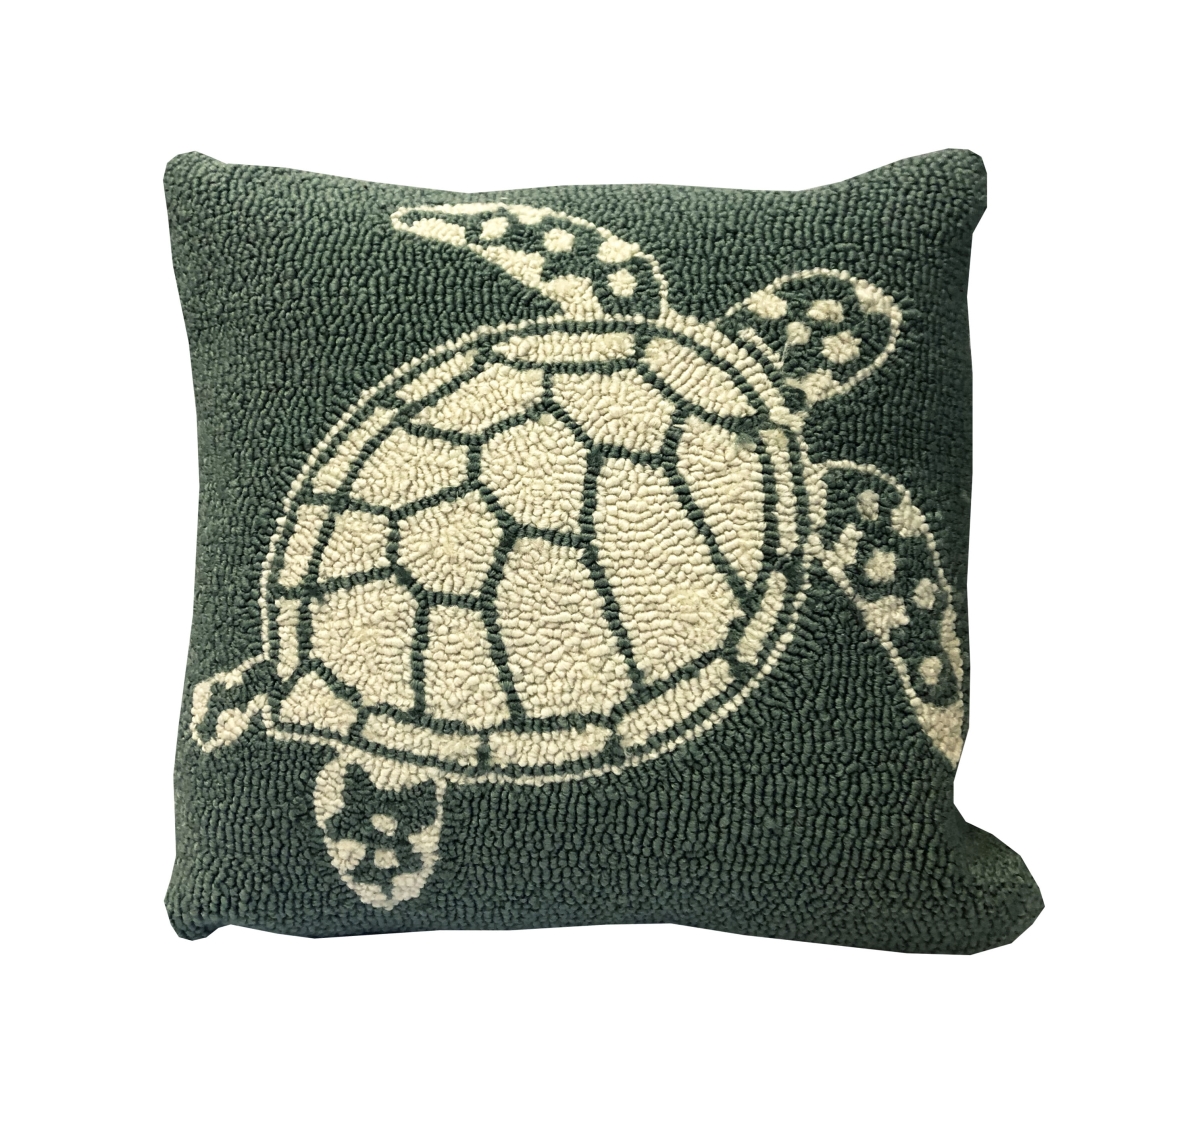 Picture of The Rug Market 26483P 18 x 18 in. Multi Turtle Pillow - Aqua